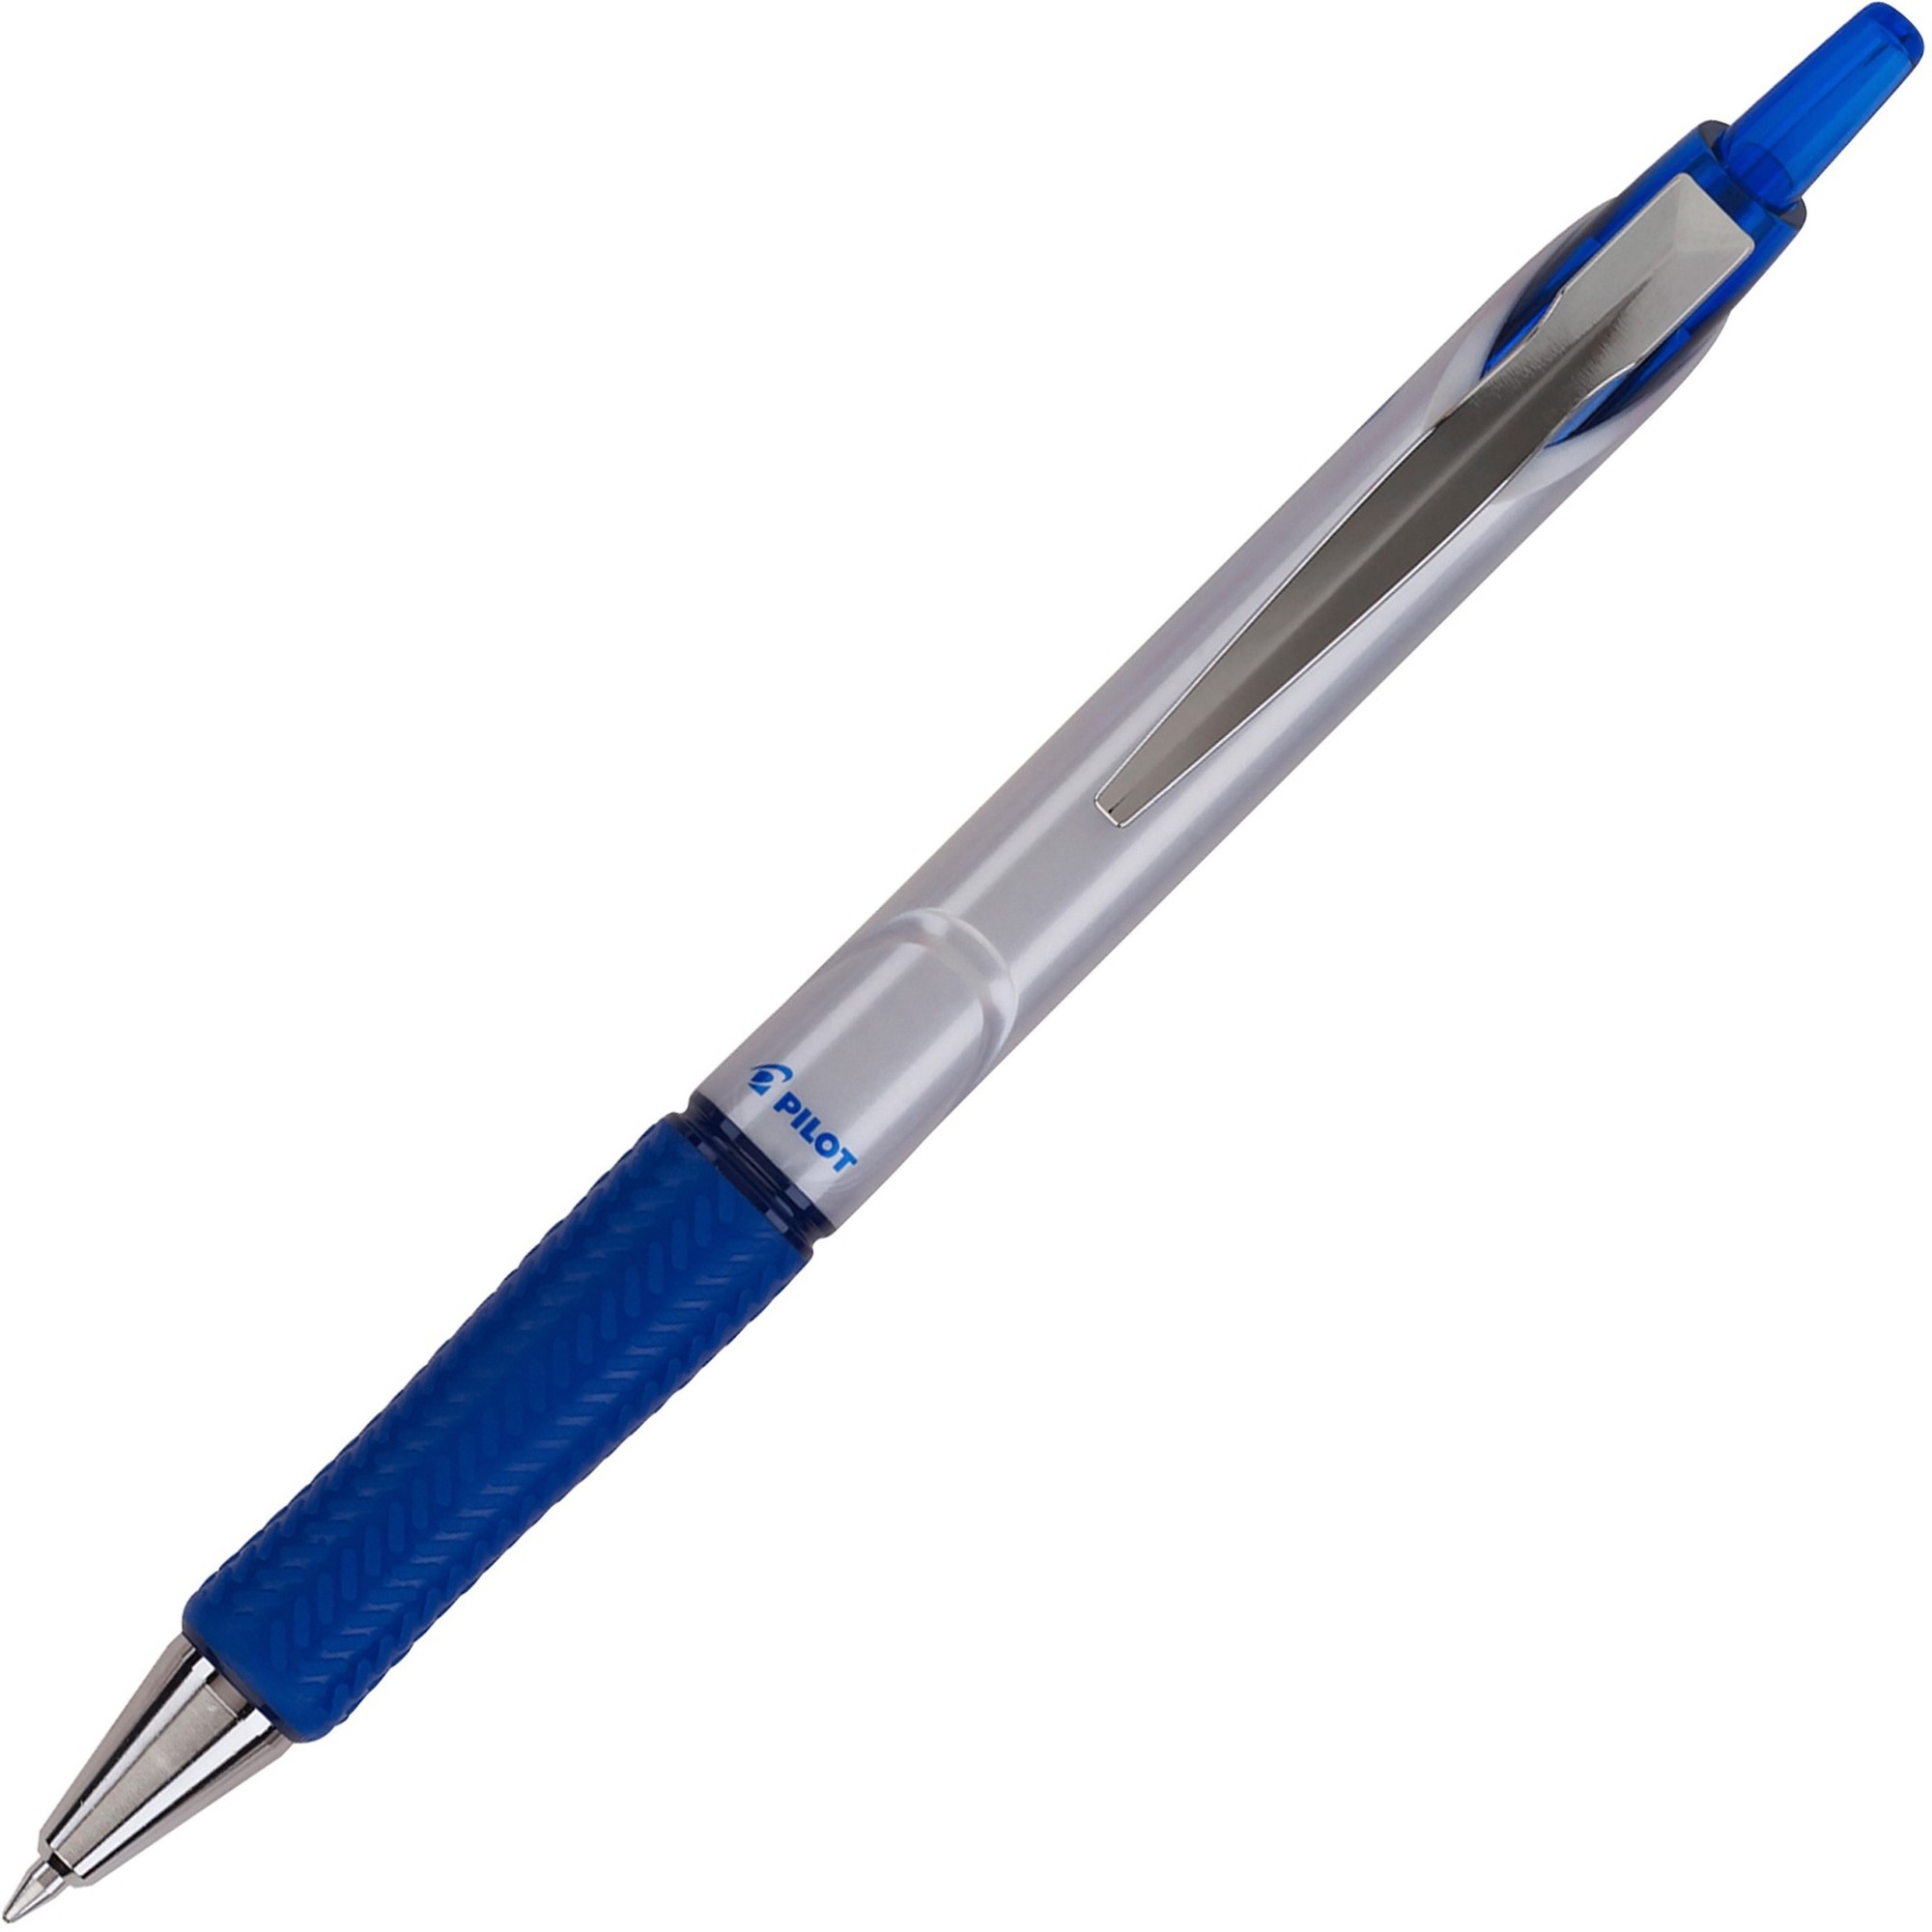 Acroball Pro Ball Point Retractable Pen, Blue Ink, 1mm, Dozen